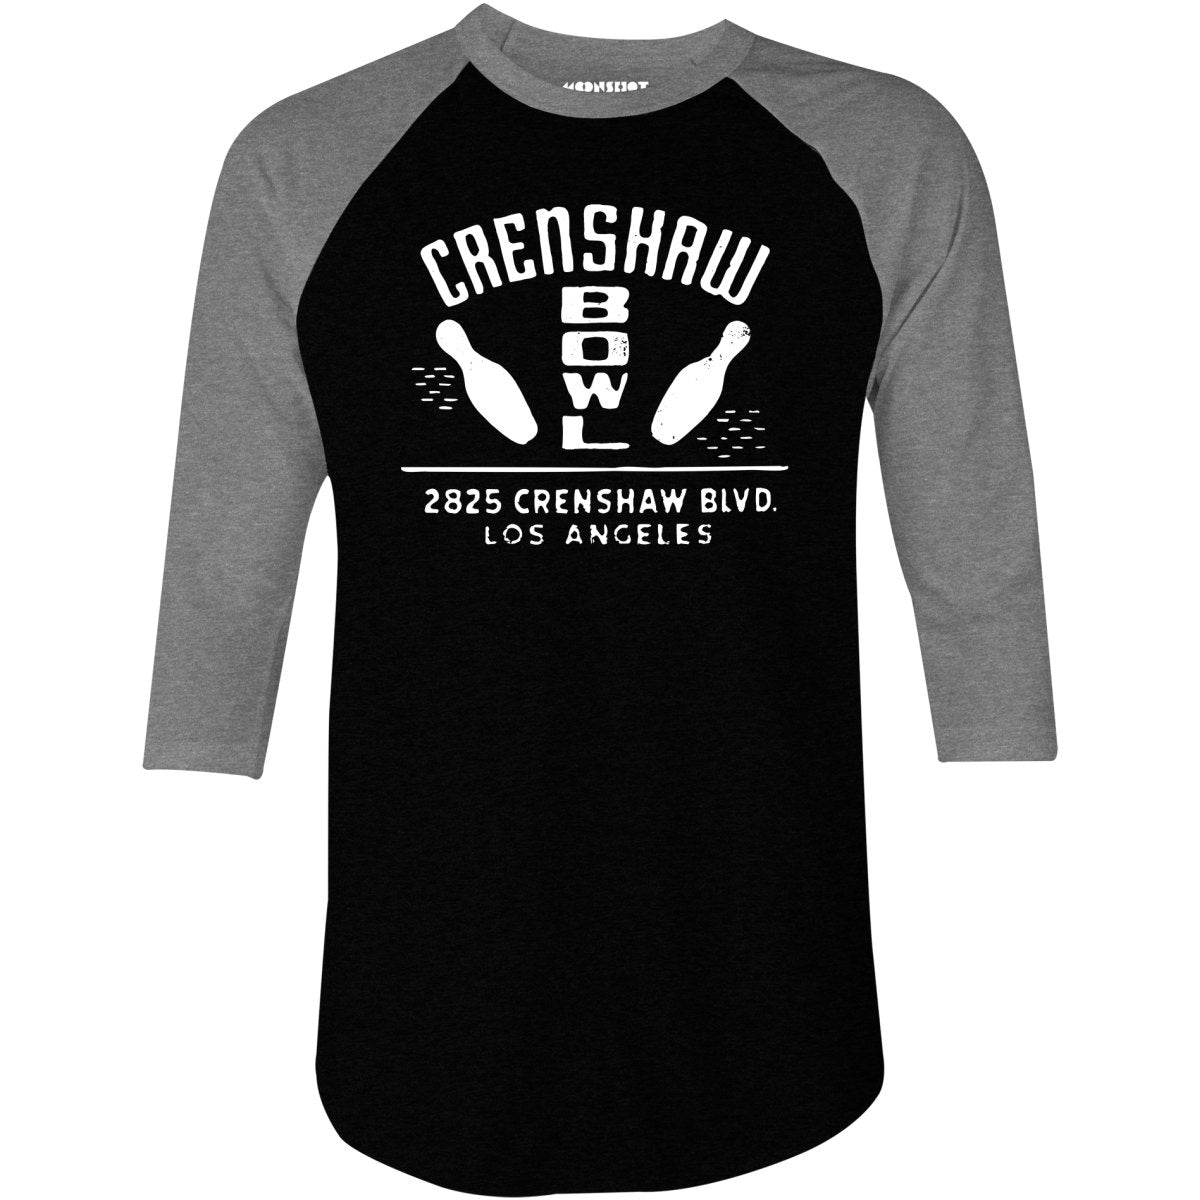 Crenshaw Bowl - Los Angeles, CA - Vintage Bowling Alley - 3/4 Sleeve Raglan T-Shirt